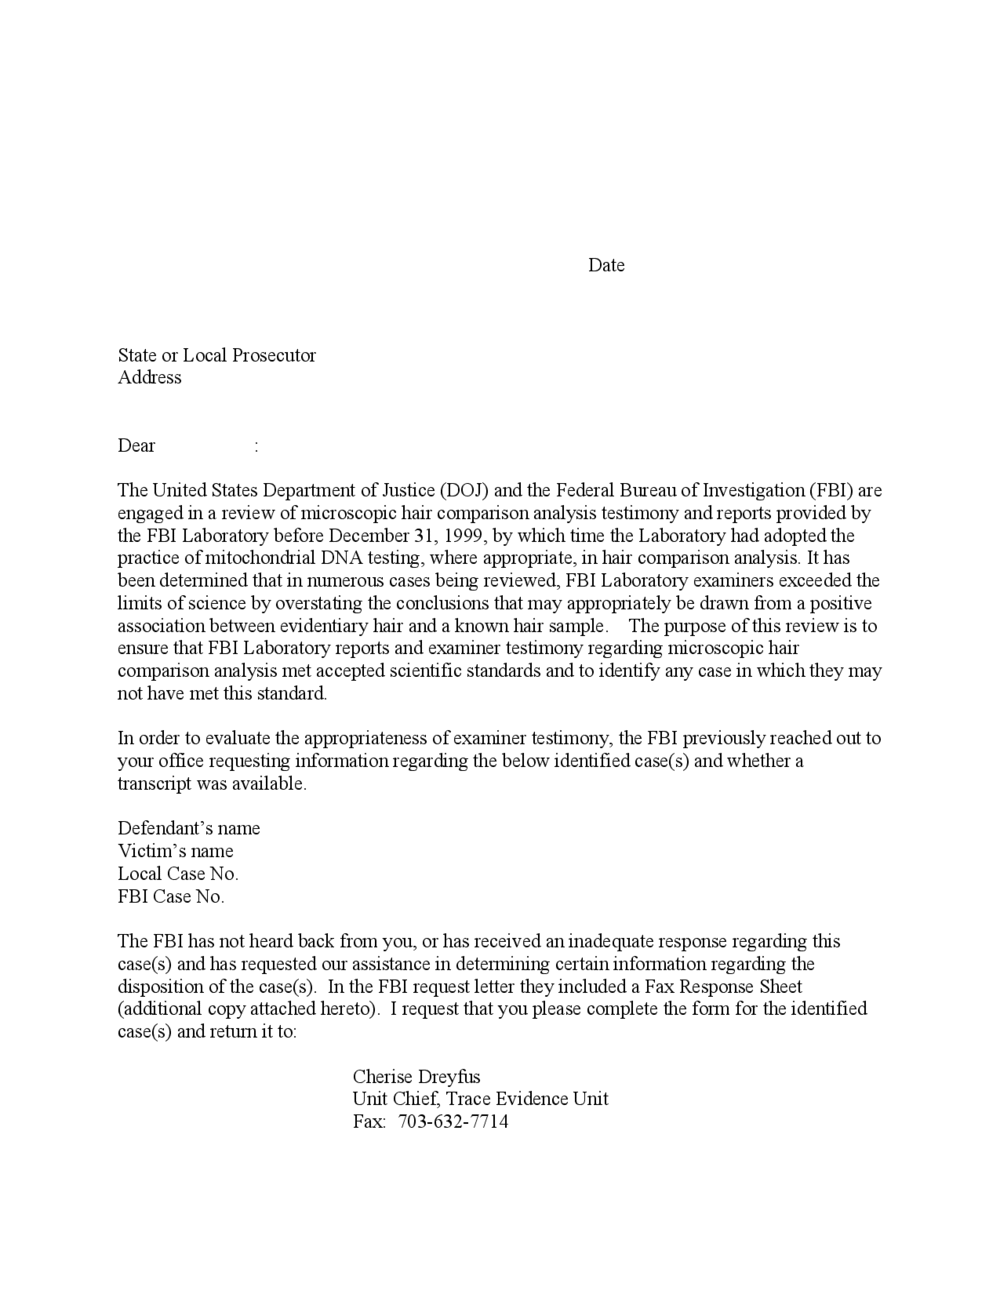 Sample Letter to Presecutors — FBI